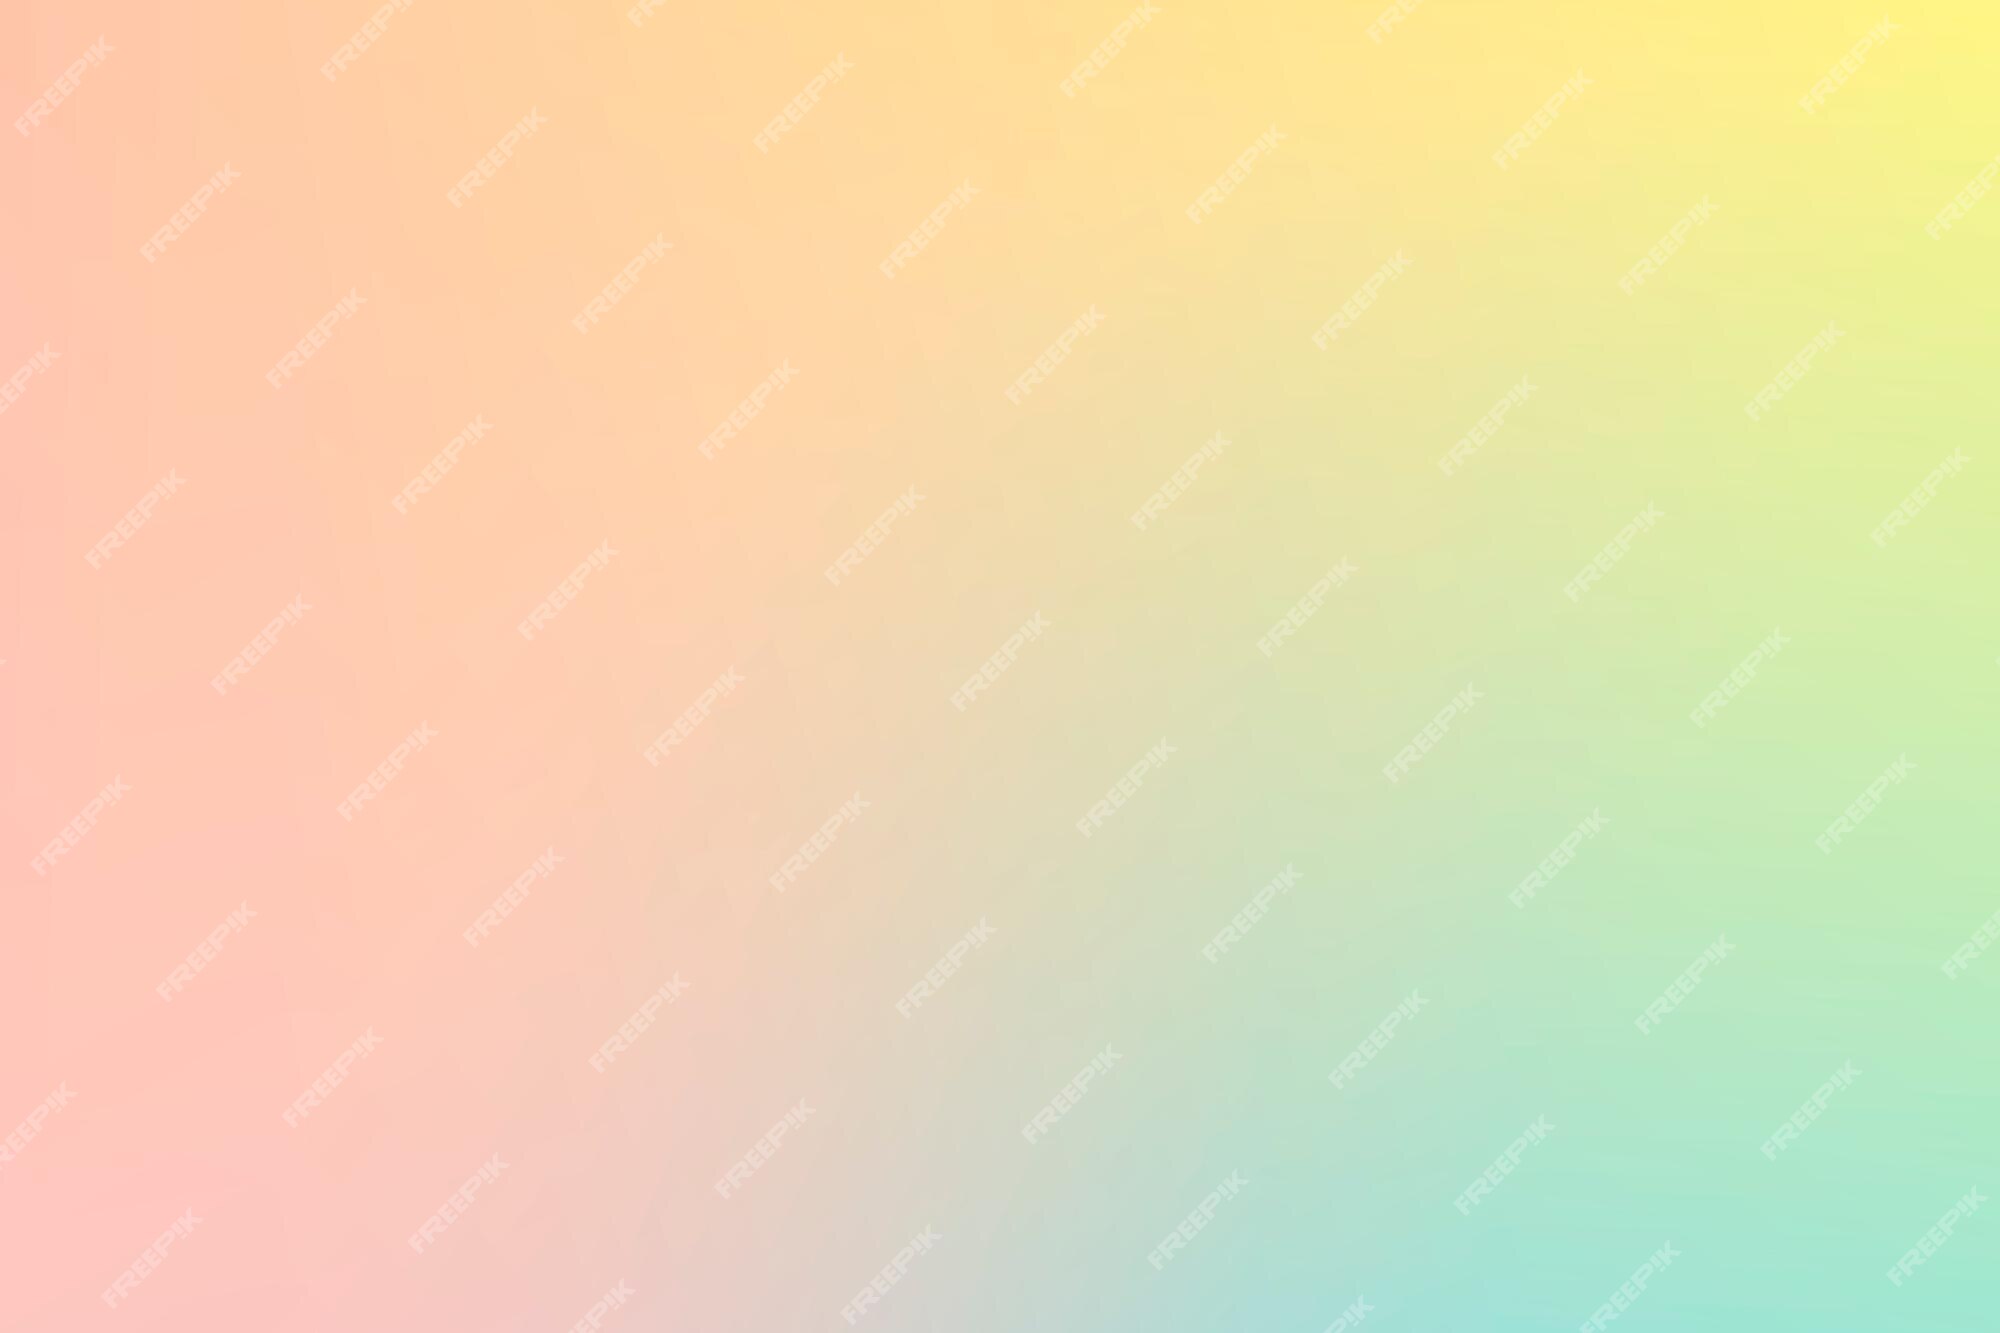 Pastel Colors Background Images - Free Download on Freepik